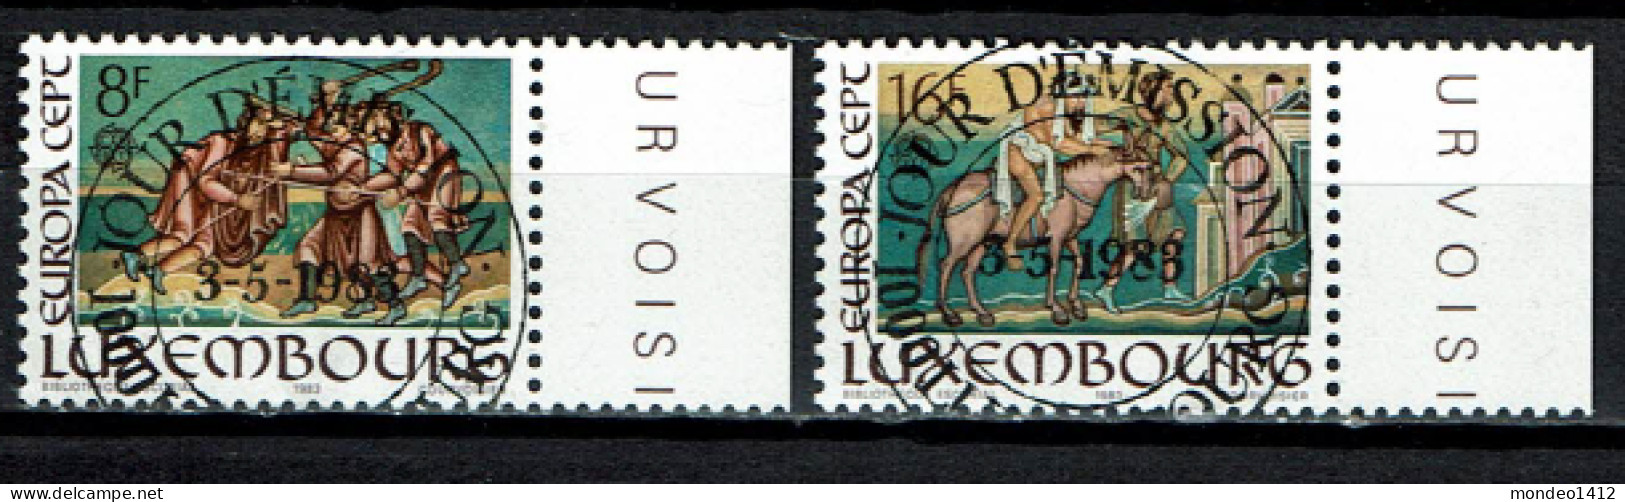 Luxembourg 1983 - YT 1024/1025 - EUROPA Stamps - Inventions - Gebruikt